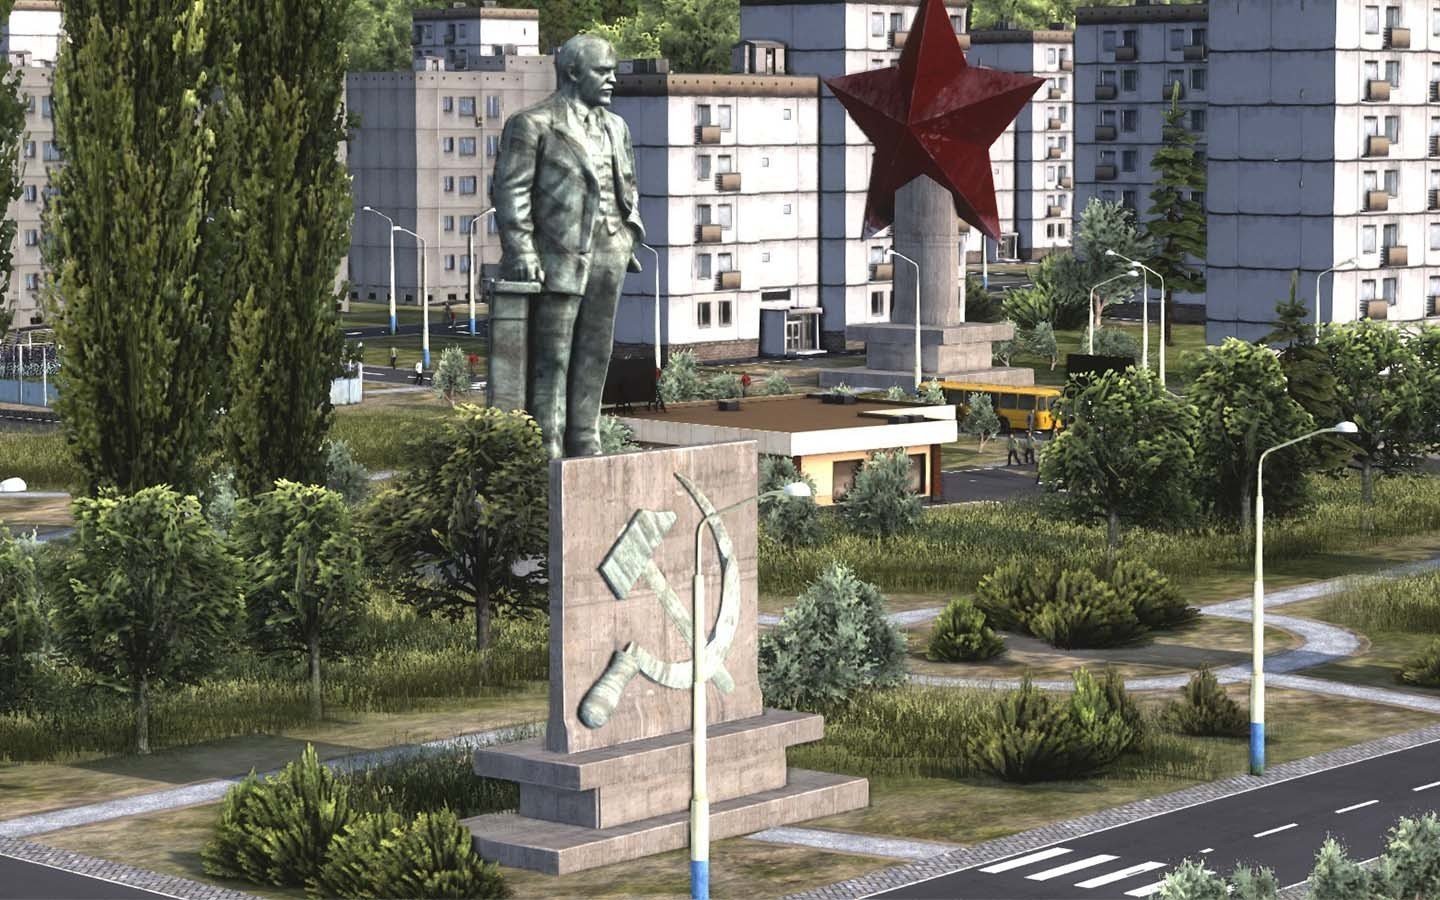 Workers & Resources: Soviet Republic